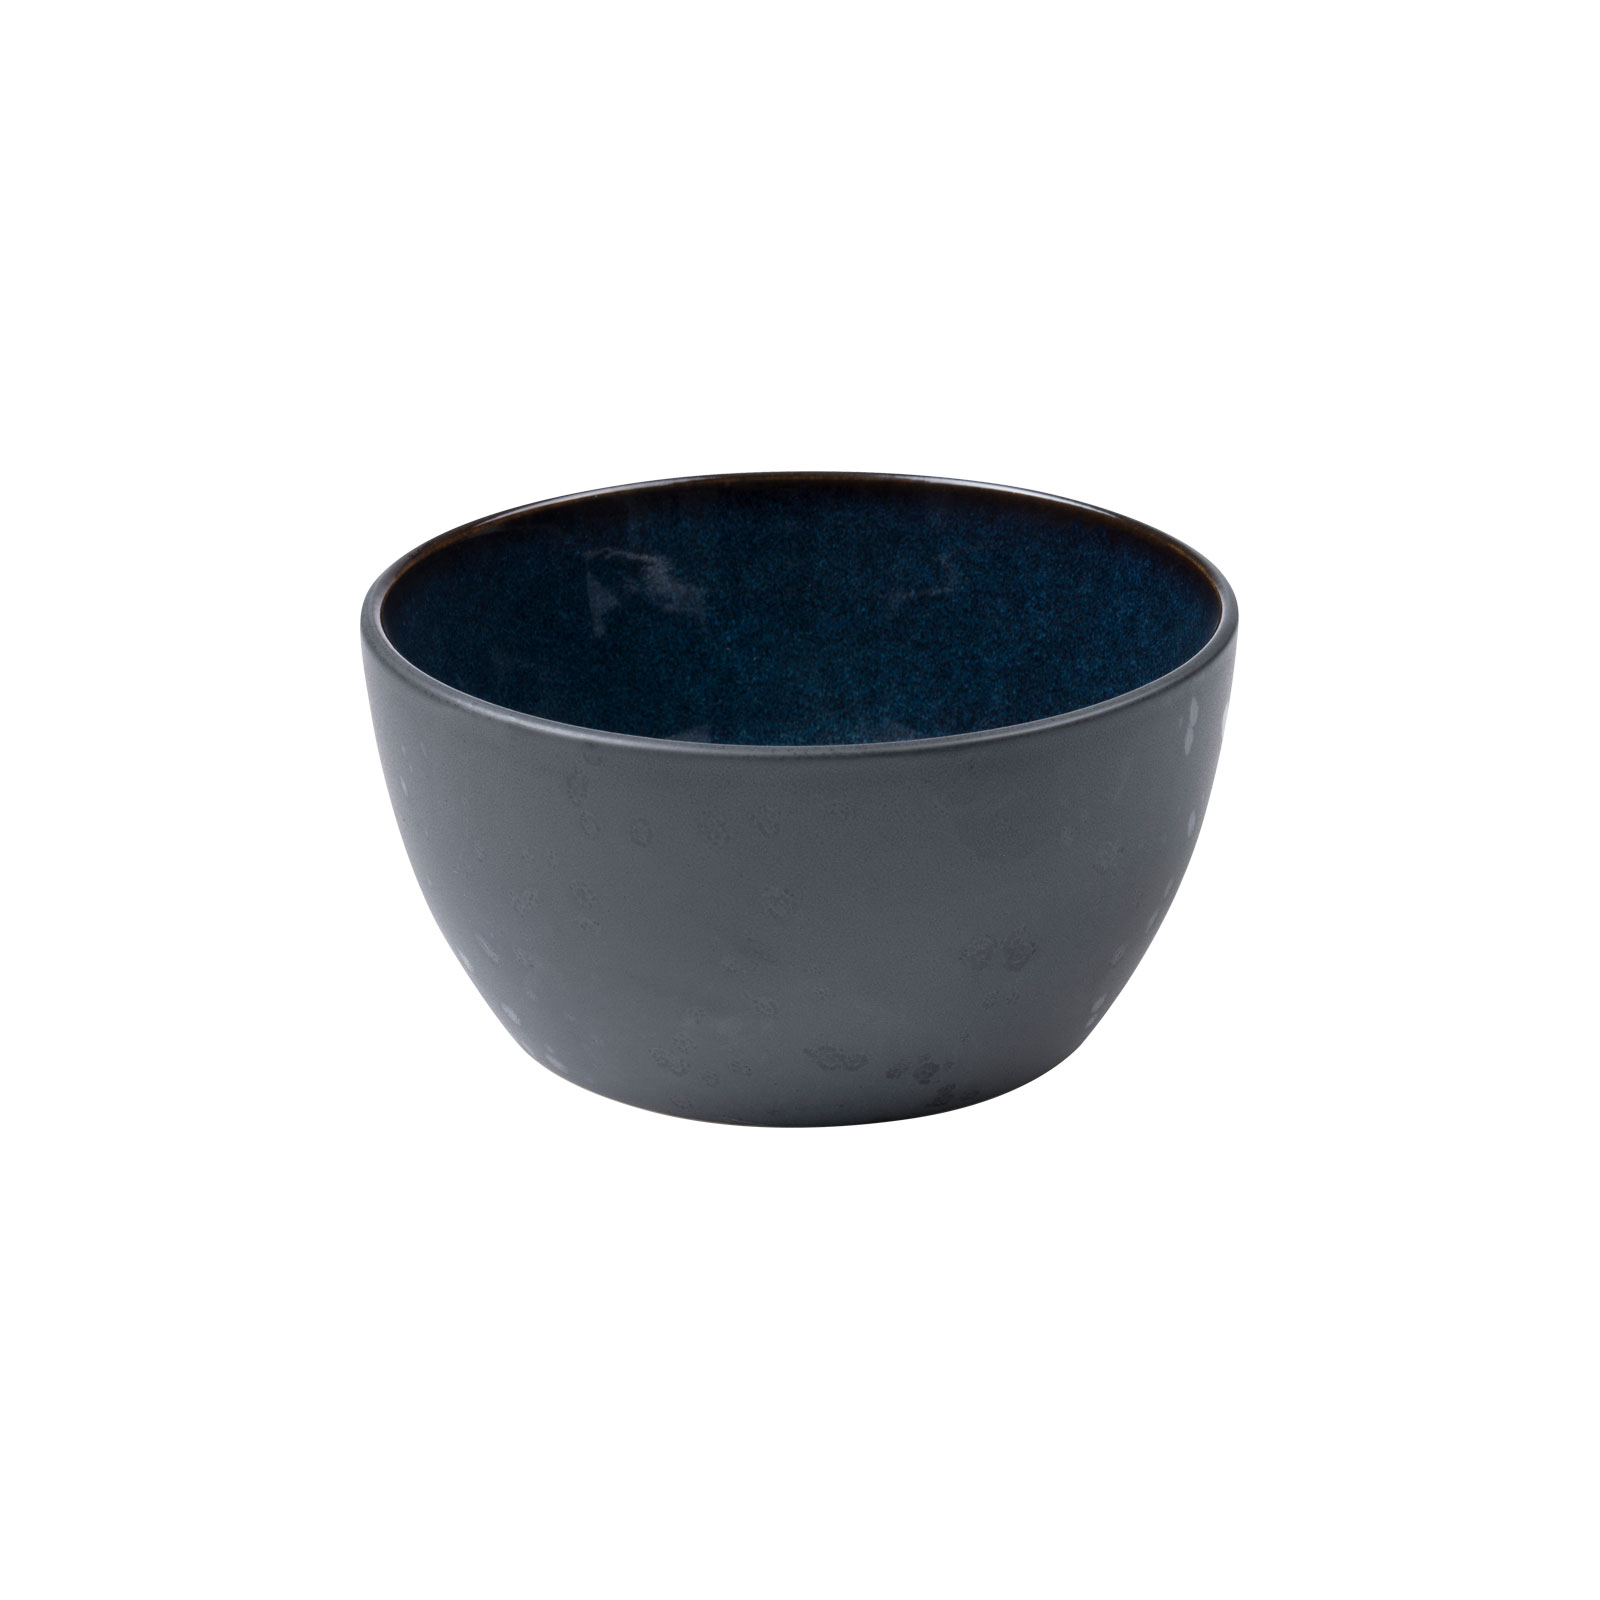 Bitz Bowl 14cm black/dark blue Keramik